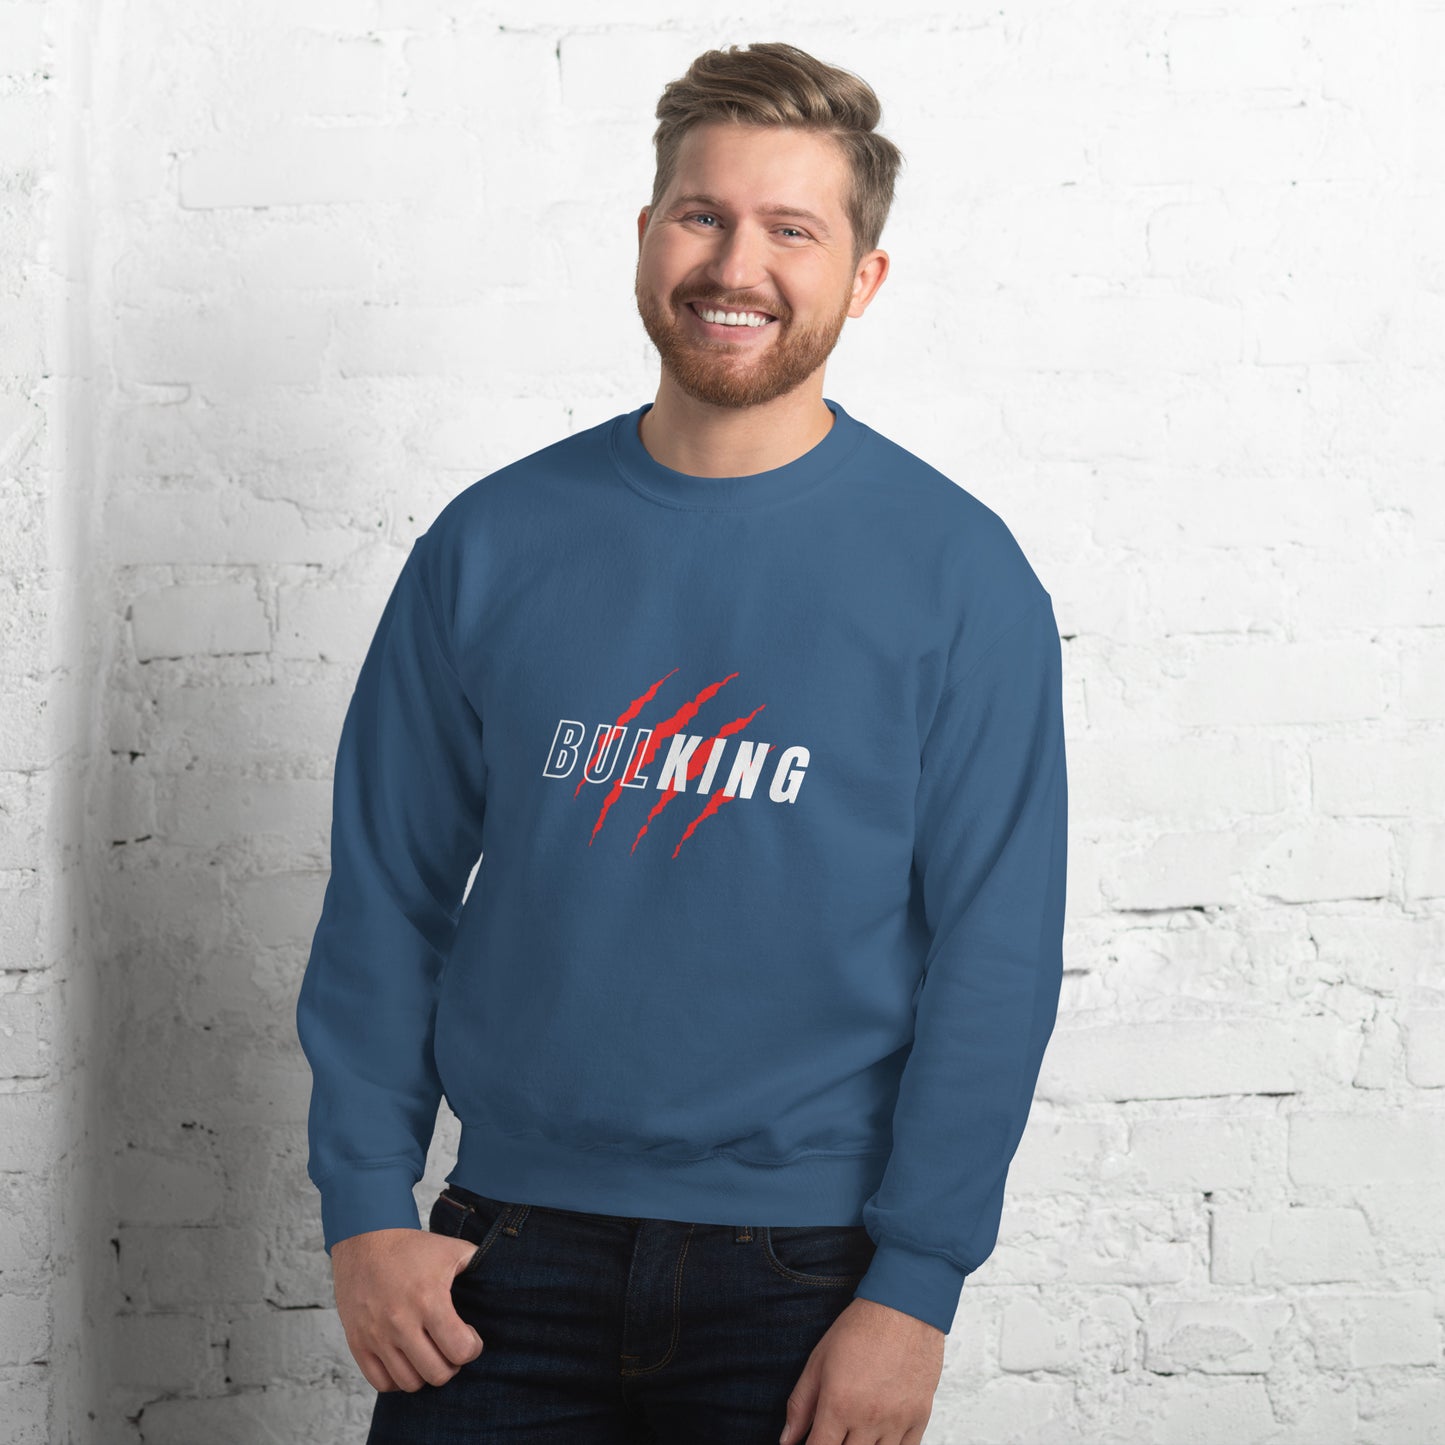 Bulking Unisex Gym Sweatshirt